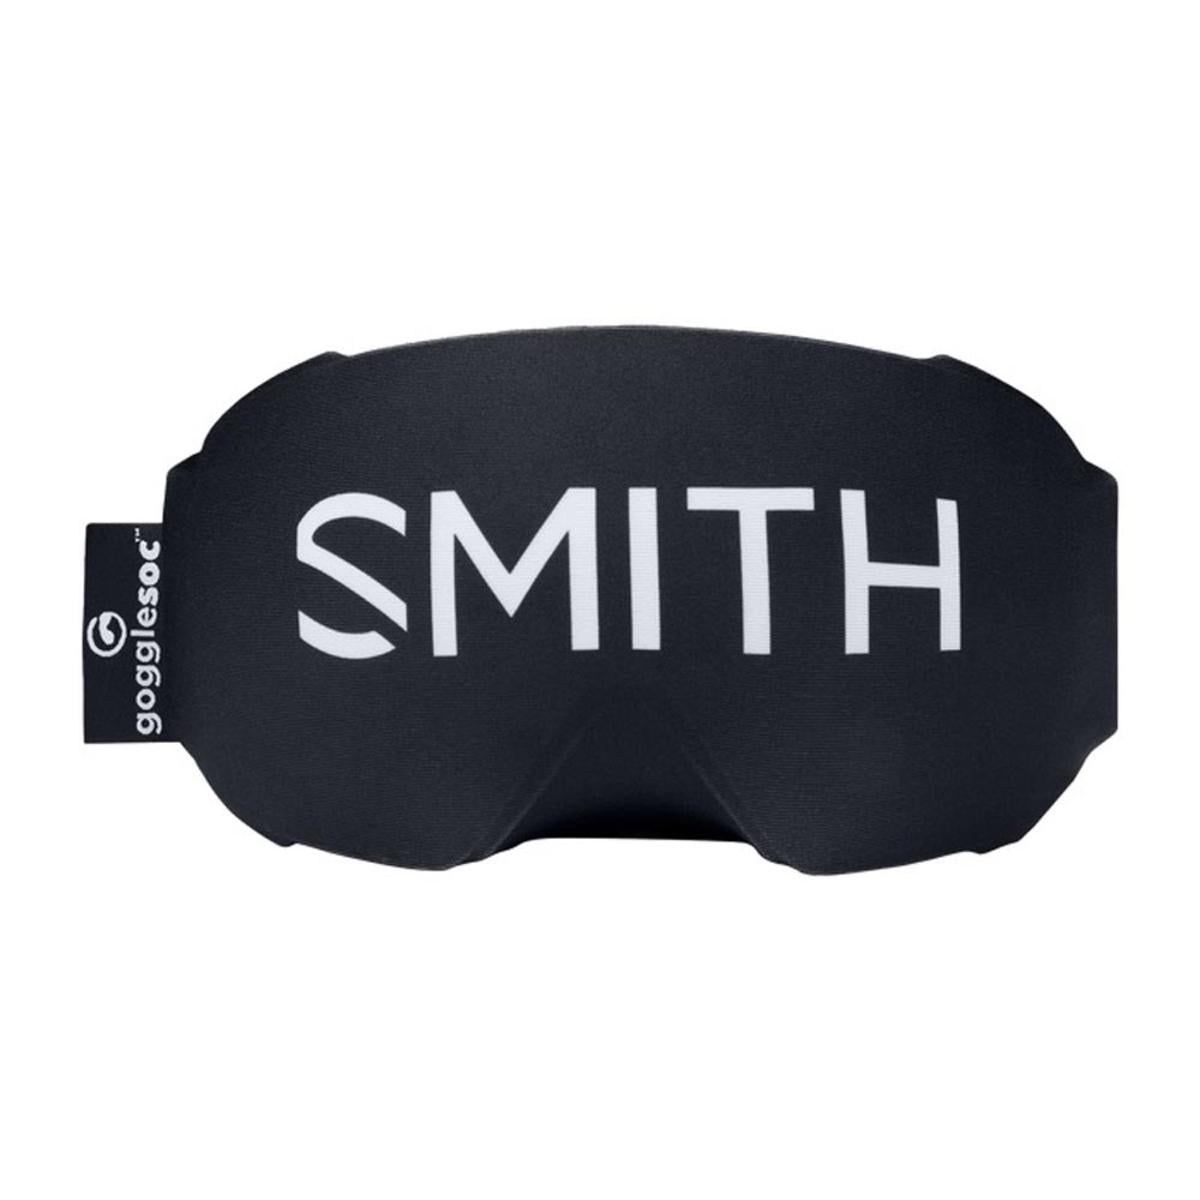 Smith Optics Squad MAG Goggles ChromaPop Everyday Green Mirror - Black Frame